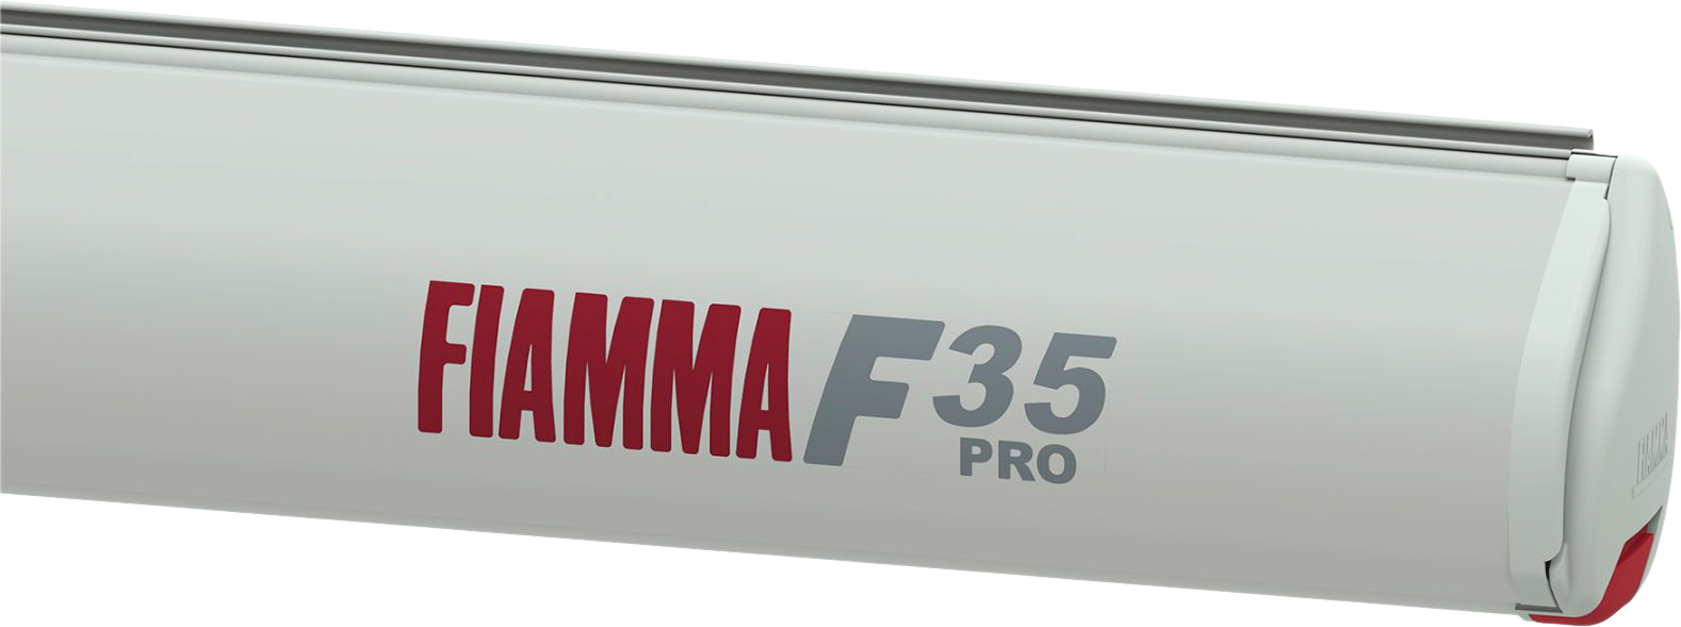 Fiamma F35 Pro 220 Markise Gehäusefarbe Titanium Tuchfarbe Royal Blue 220 cm